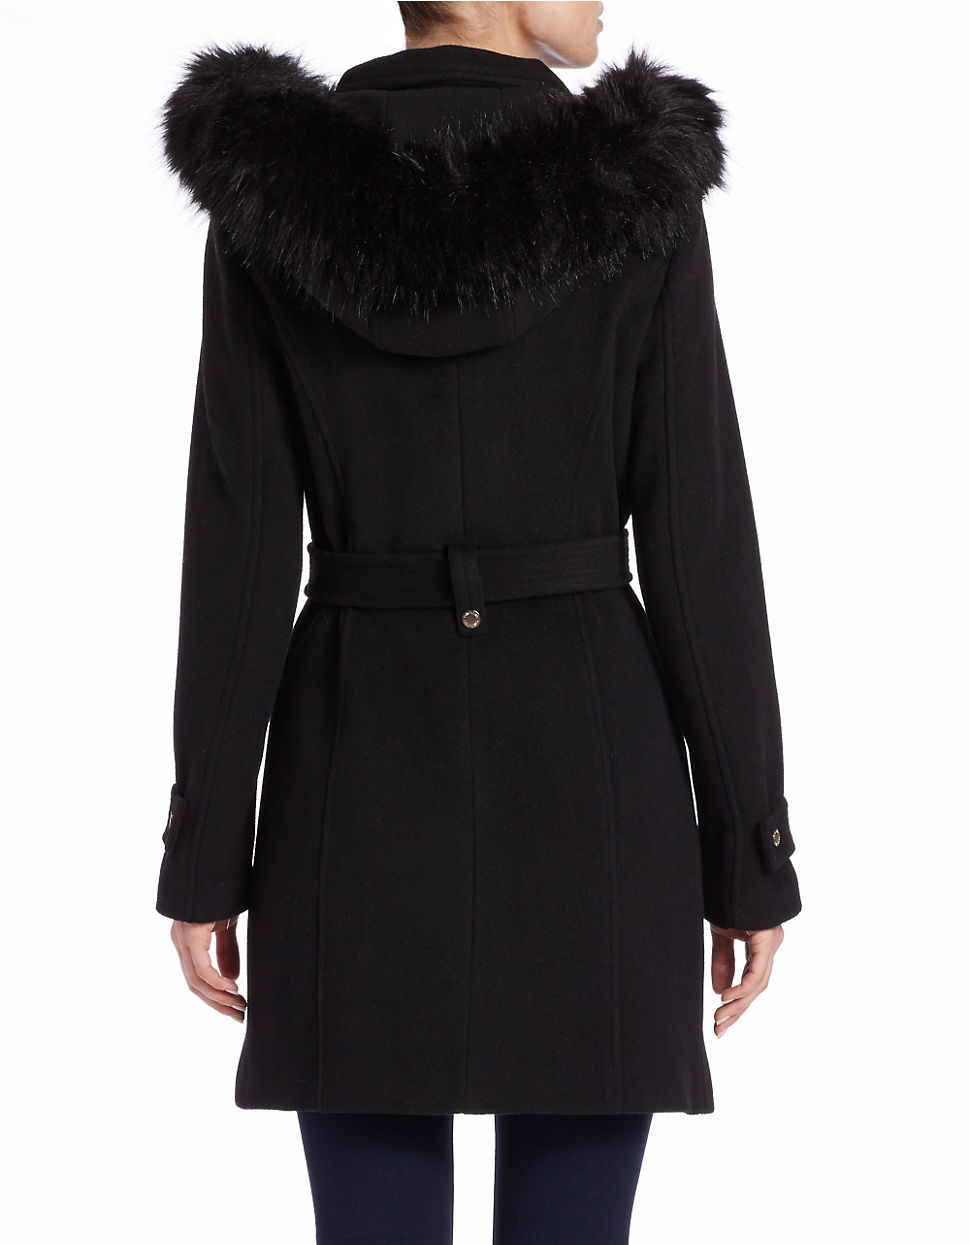 Lyst - Calvin klein Faux Fur-trimmed Belted Coat in Black